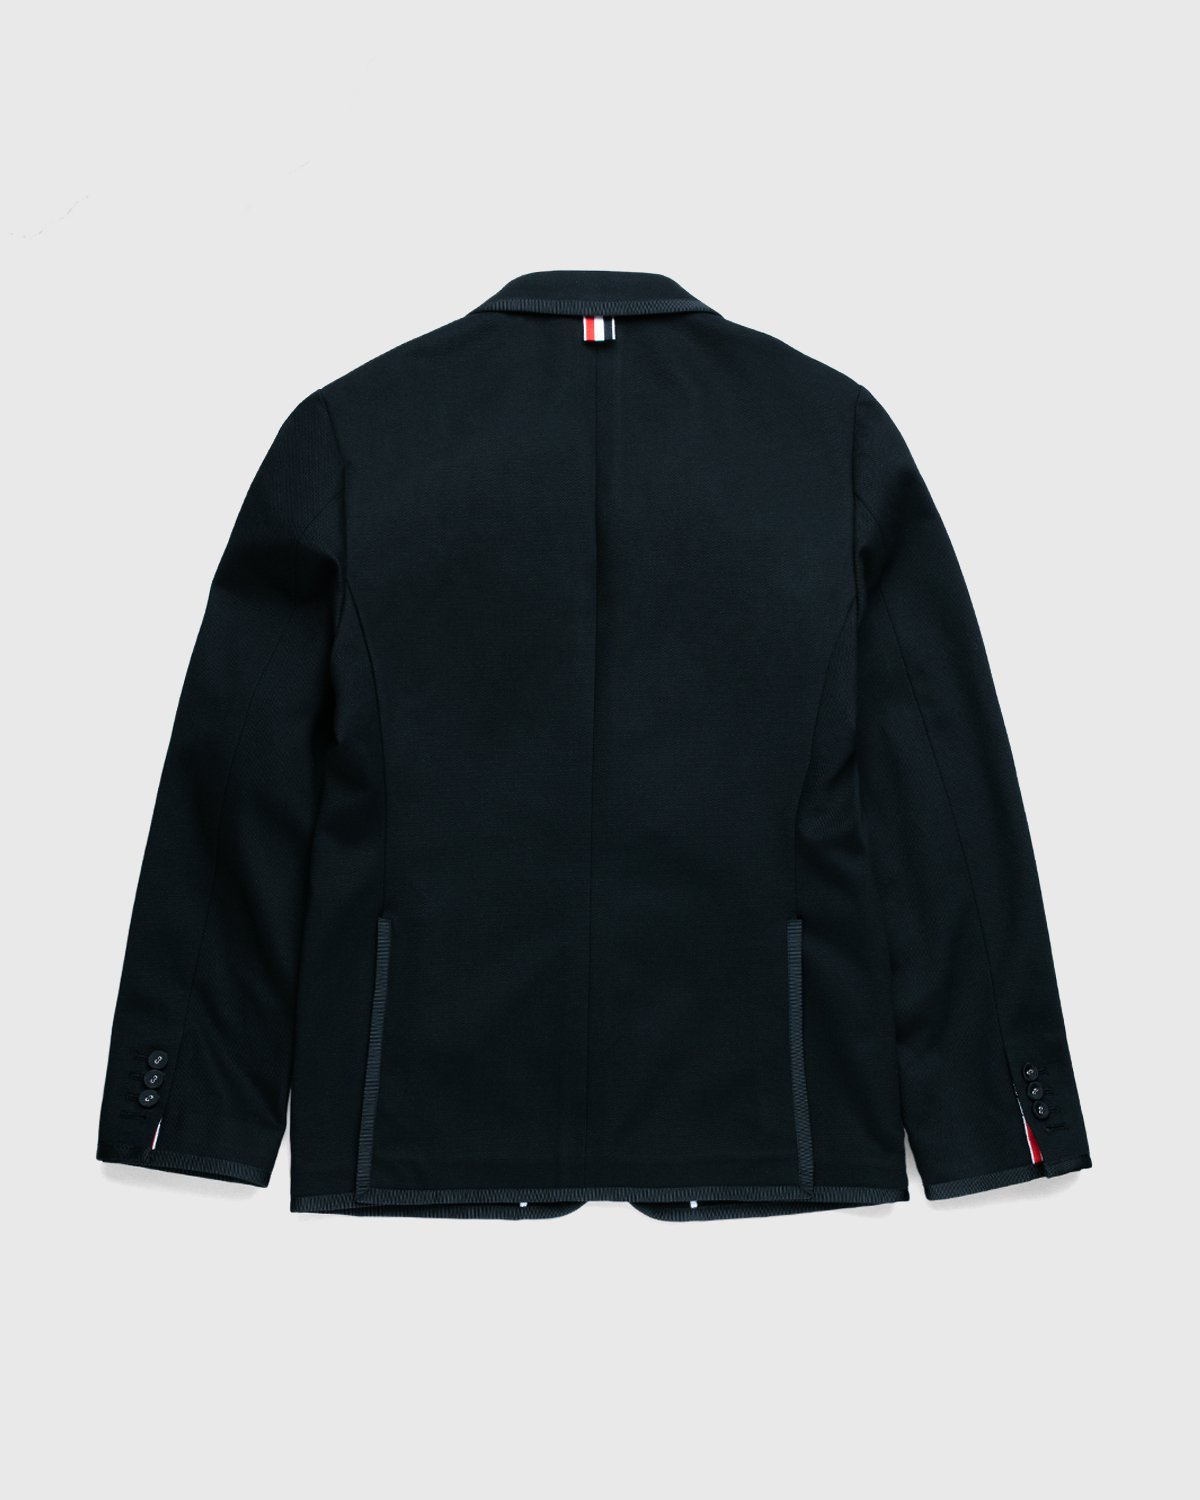 Thom Browne x Highsnobiety - Women’s Deconstructed Sport Jacket Black - Clothing - Black - Image 2